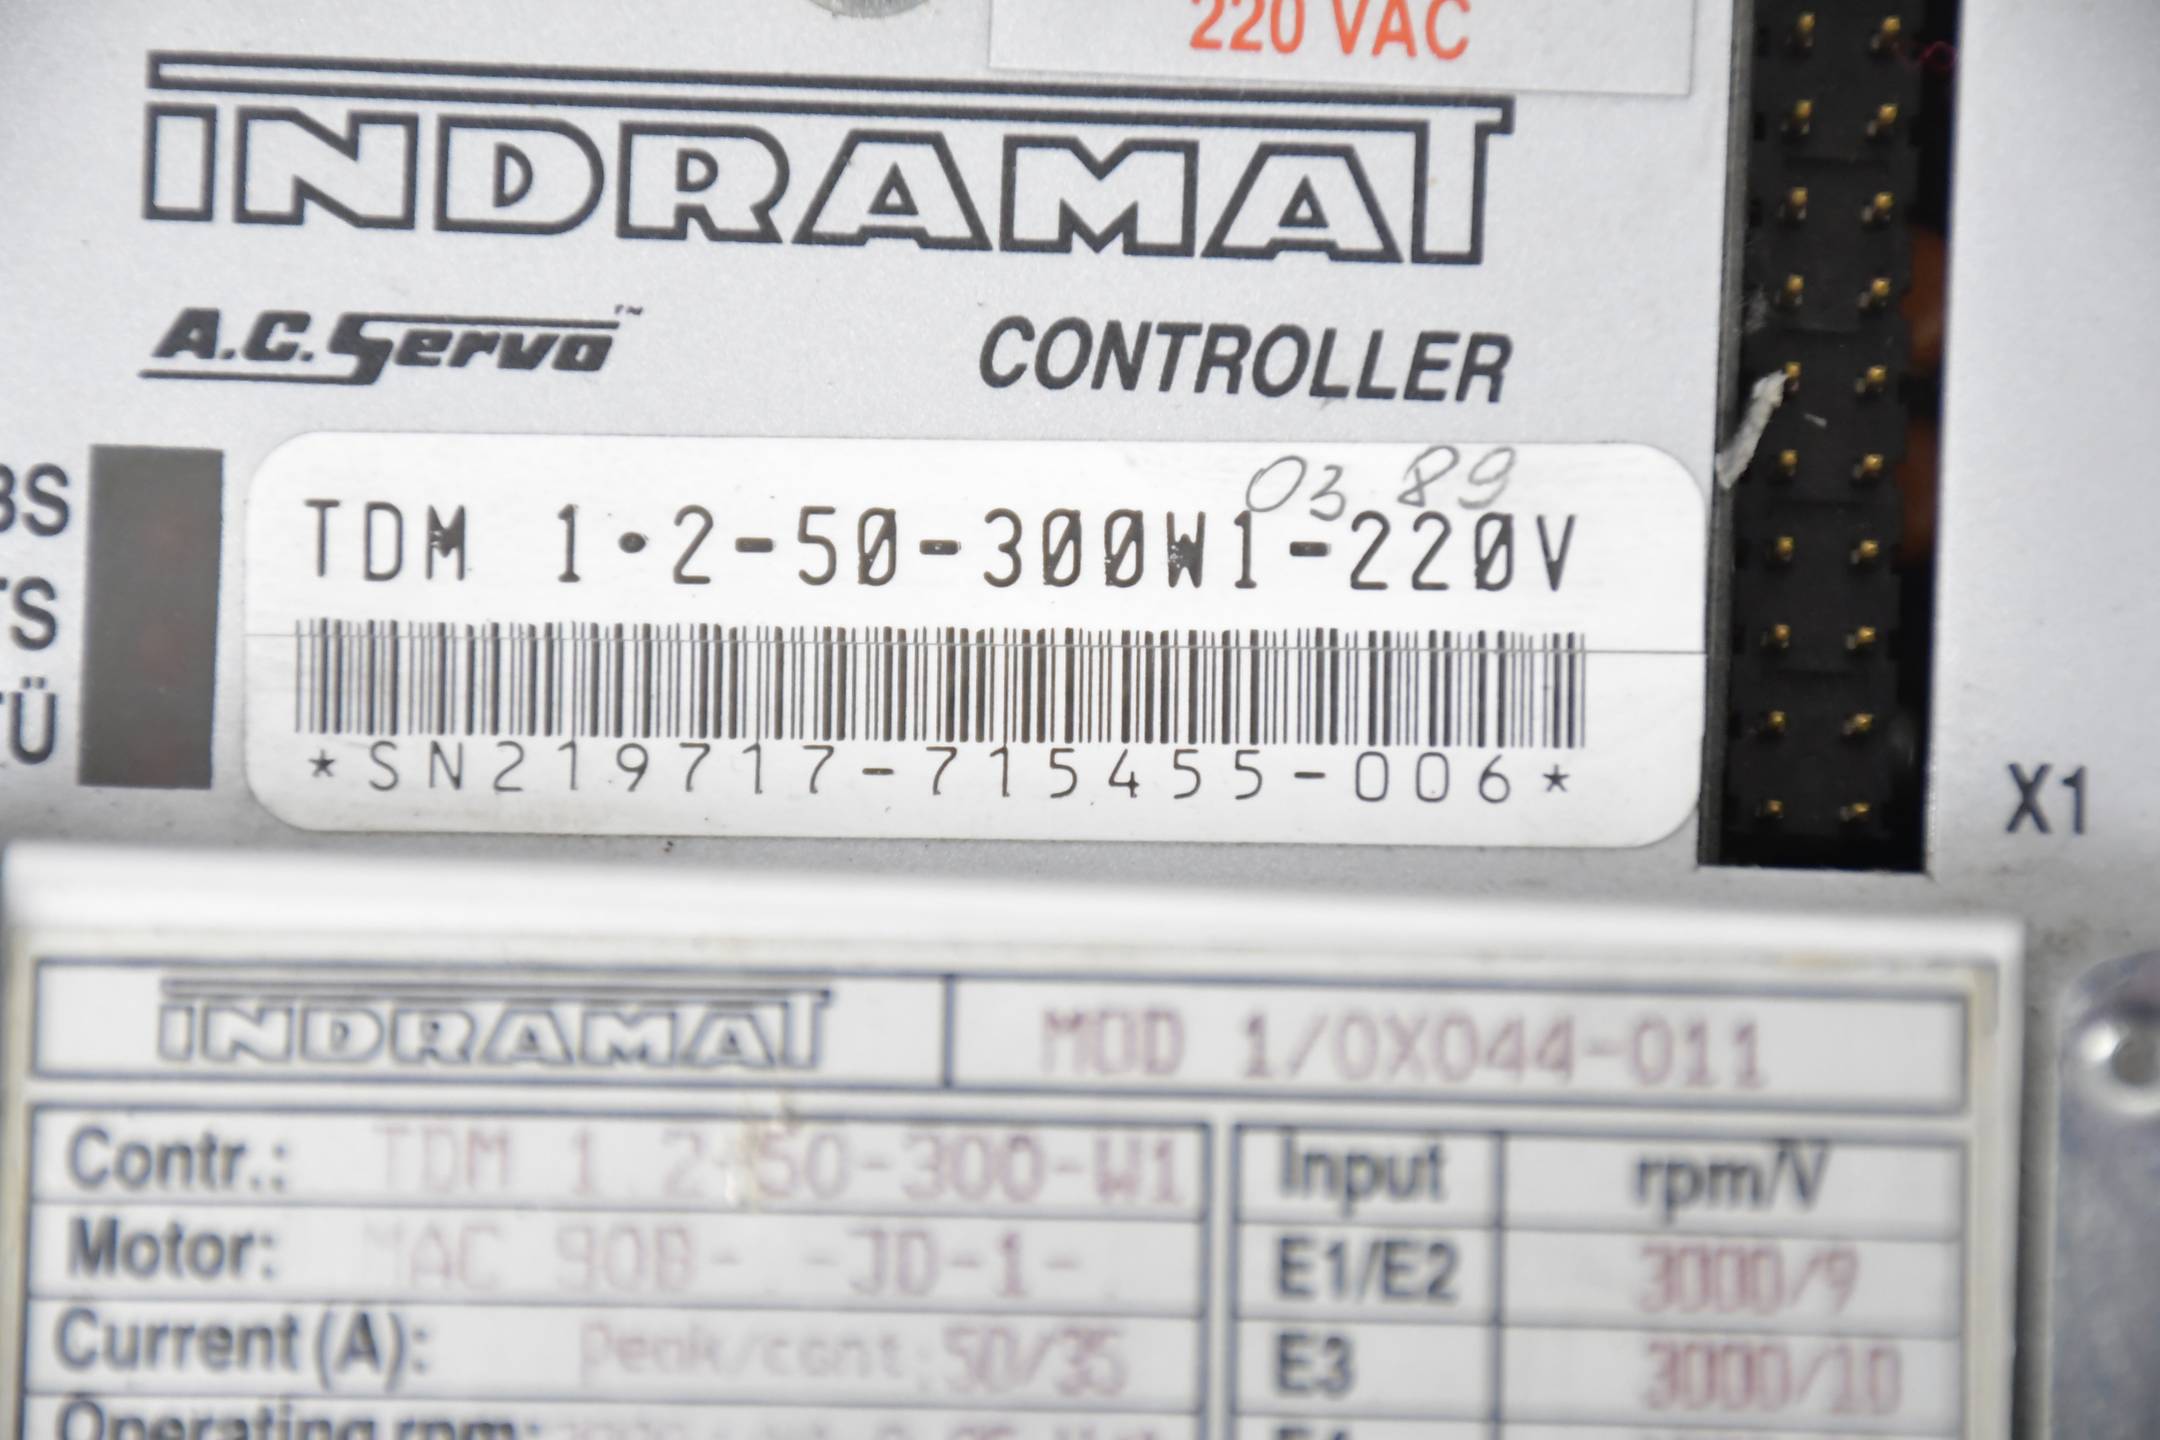 Indramat A.C. Servo Controller TDM 1.2-50-300W1-220V inkl. Mod. 1/0X044-011